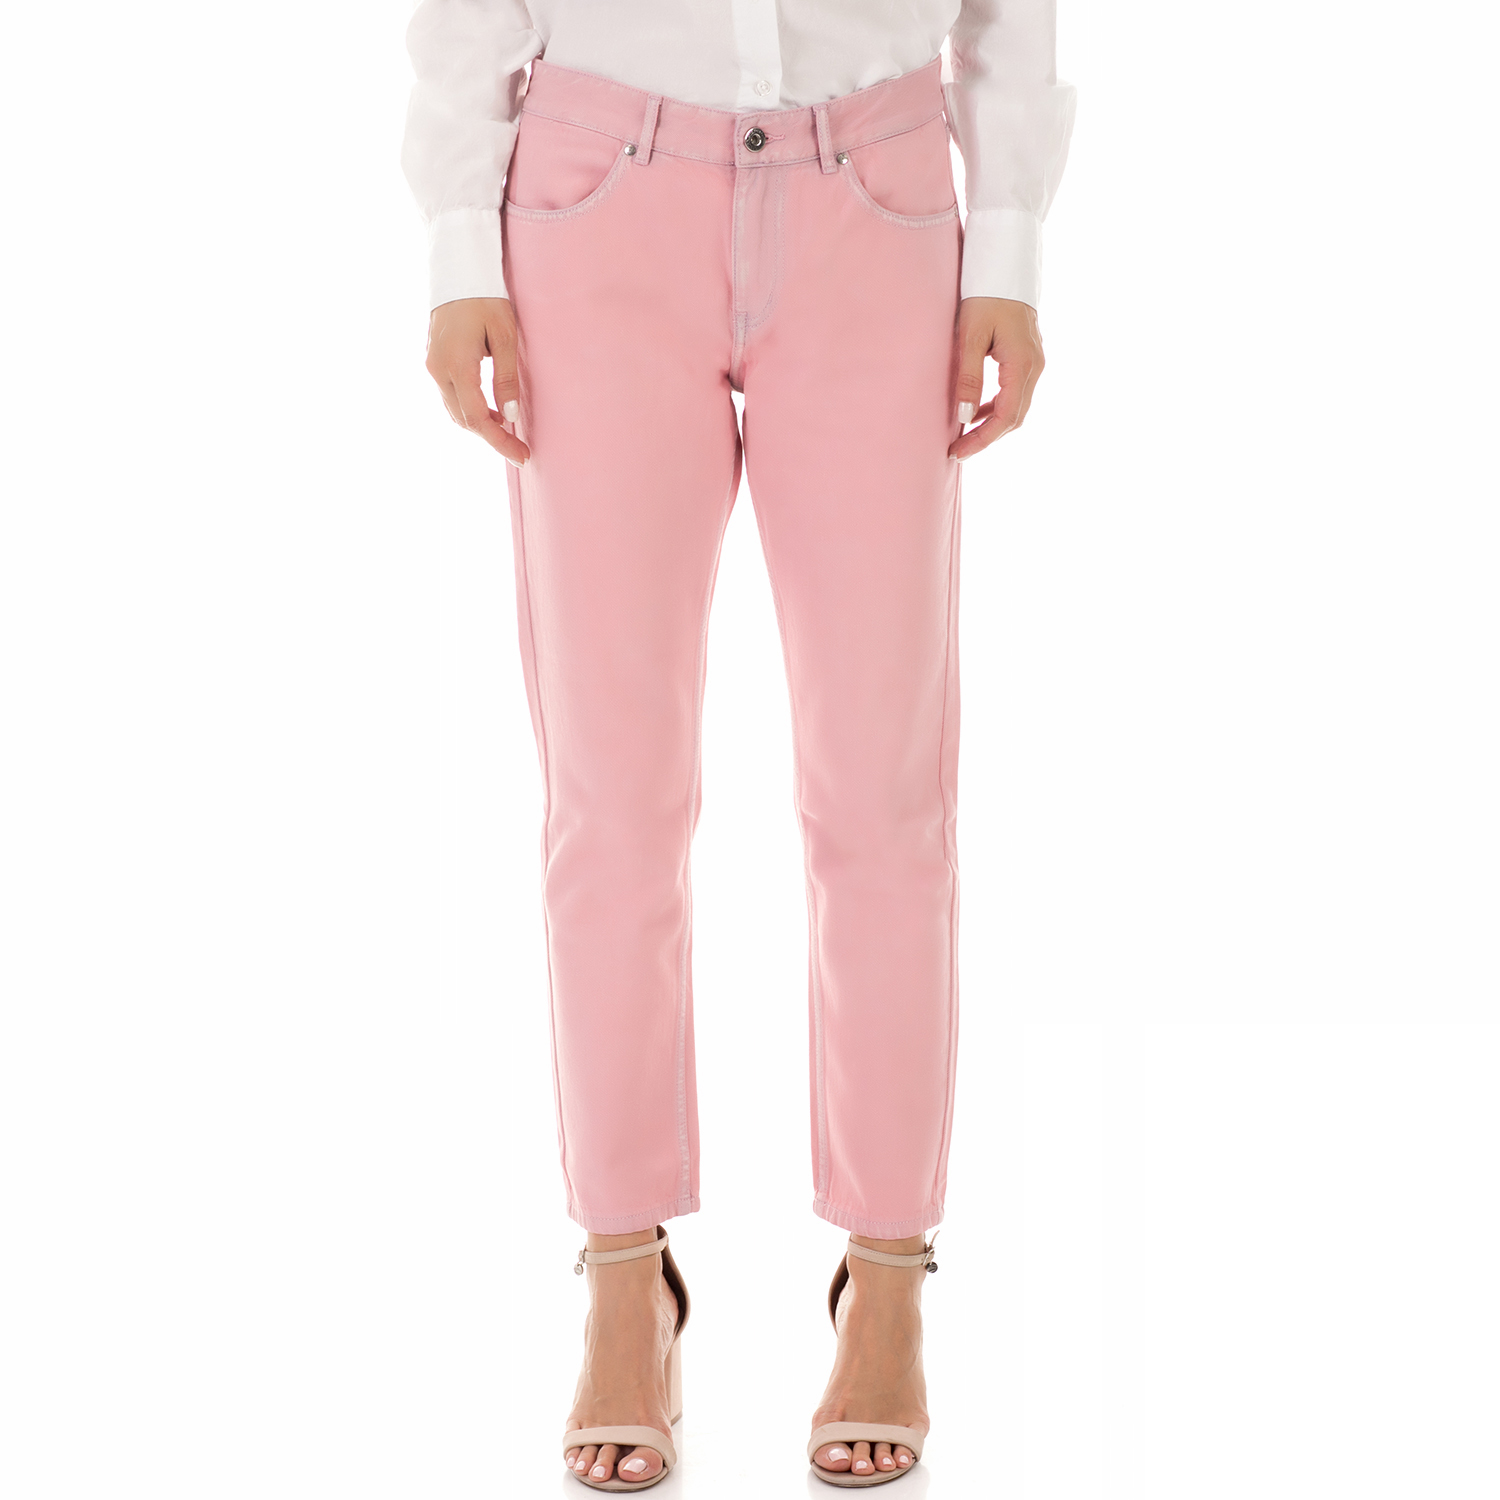 SCOTCH & SODA - Γυναικείο jean παντελόνι SCOTCH & SODA BANDIT ροζ Γυναικεία/Ρούχα/Τζίν/Straight